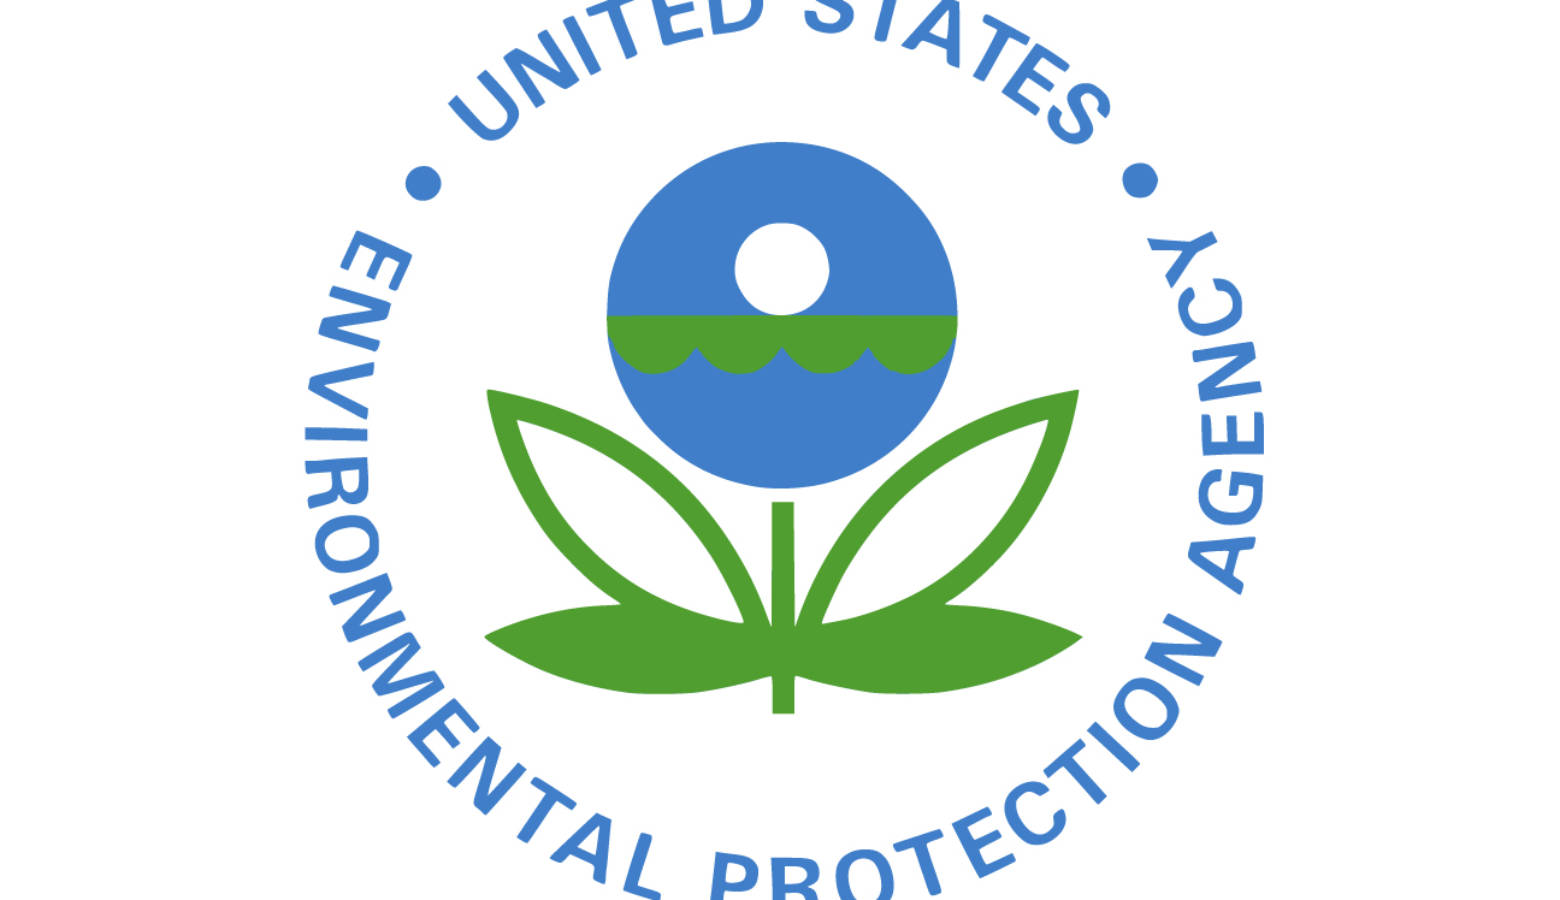 (U.S. Environmental Protection Agency)